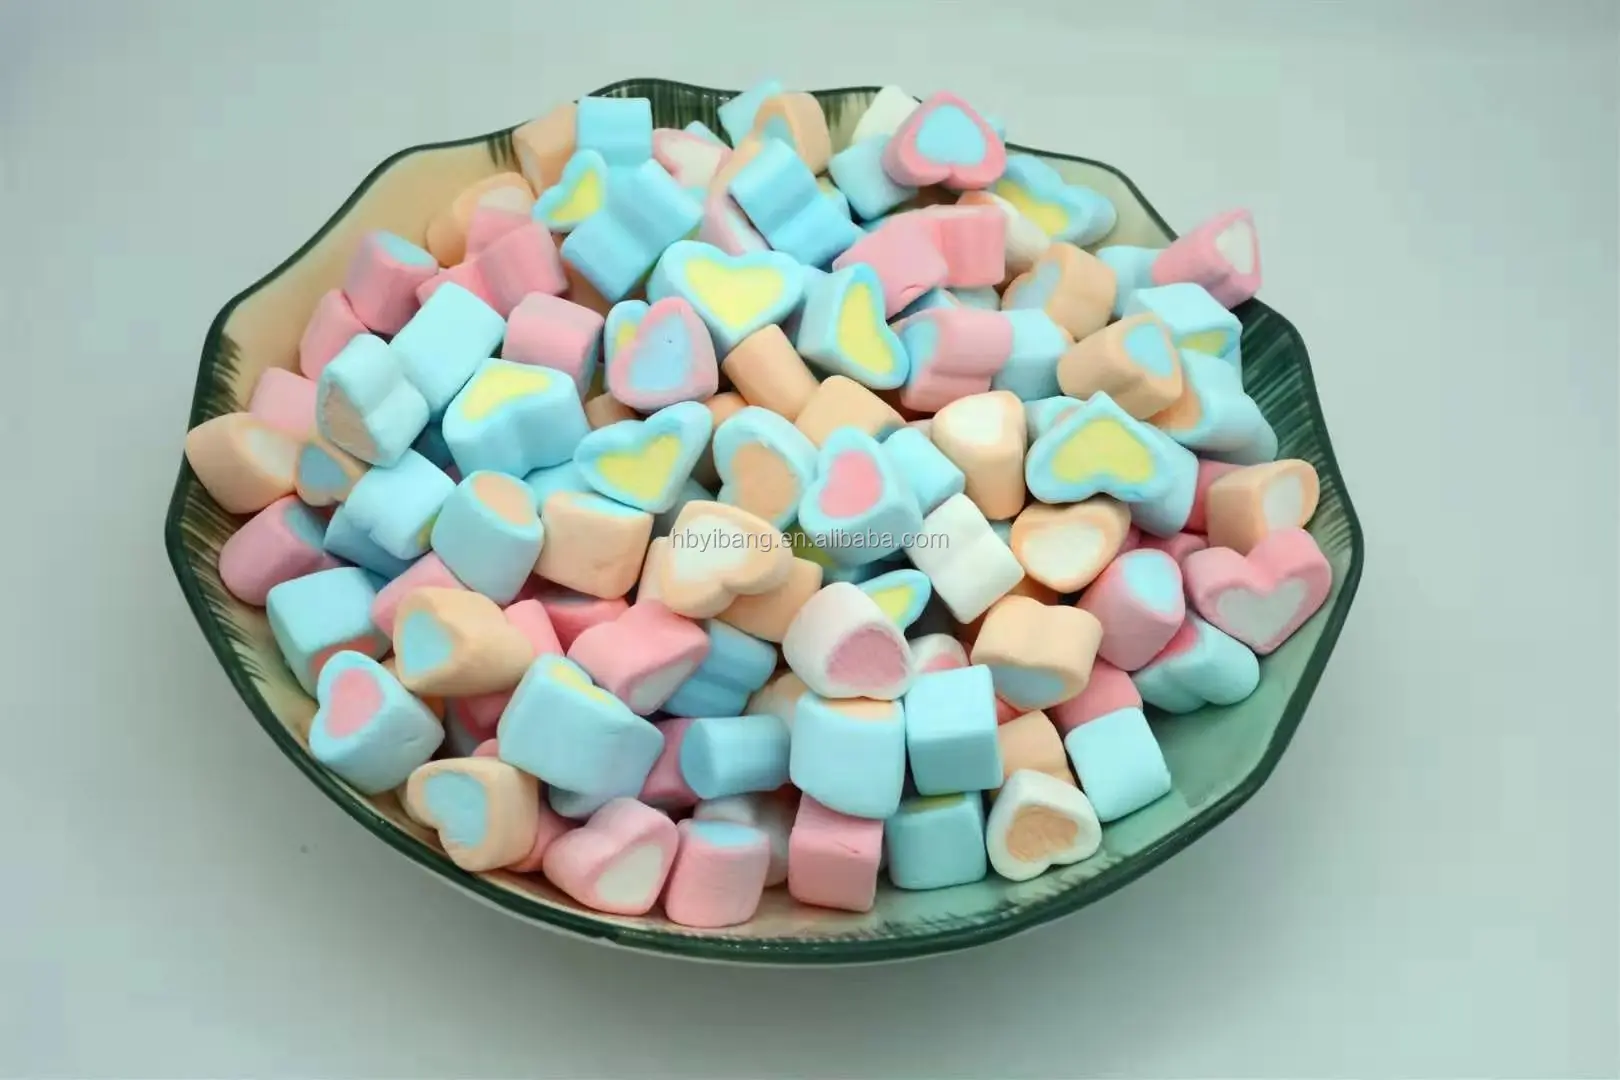 export quality kids favourite sweet heart shape mashmallow